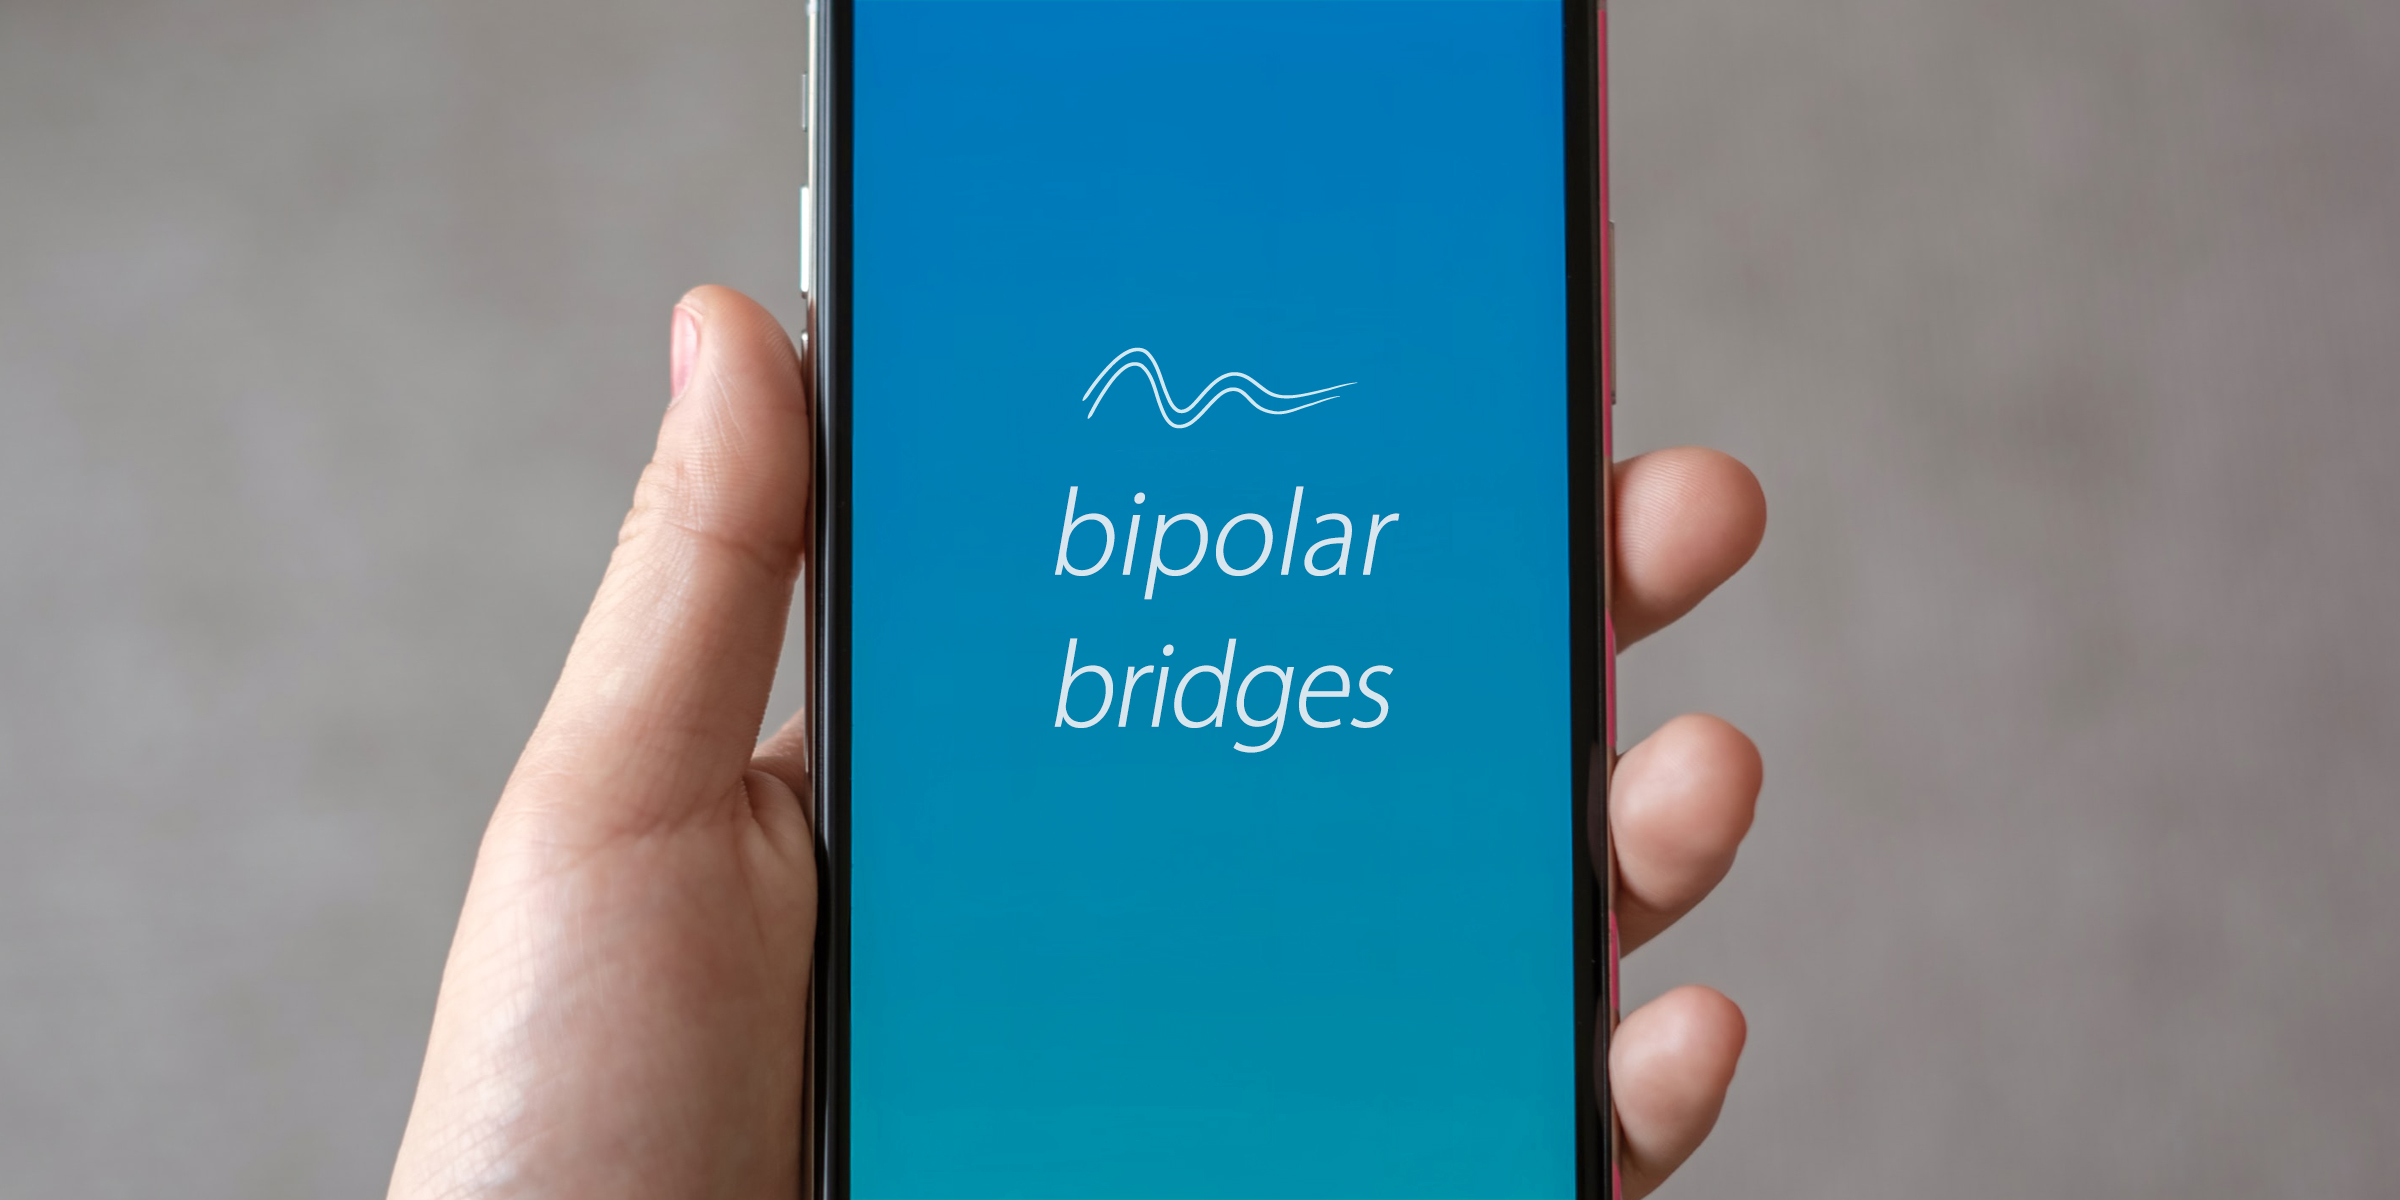 Phone with 'Bipolar Bridges' on the screen